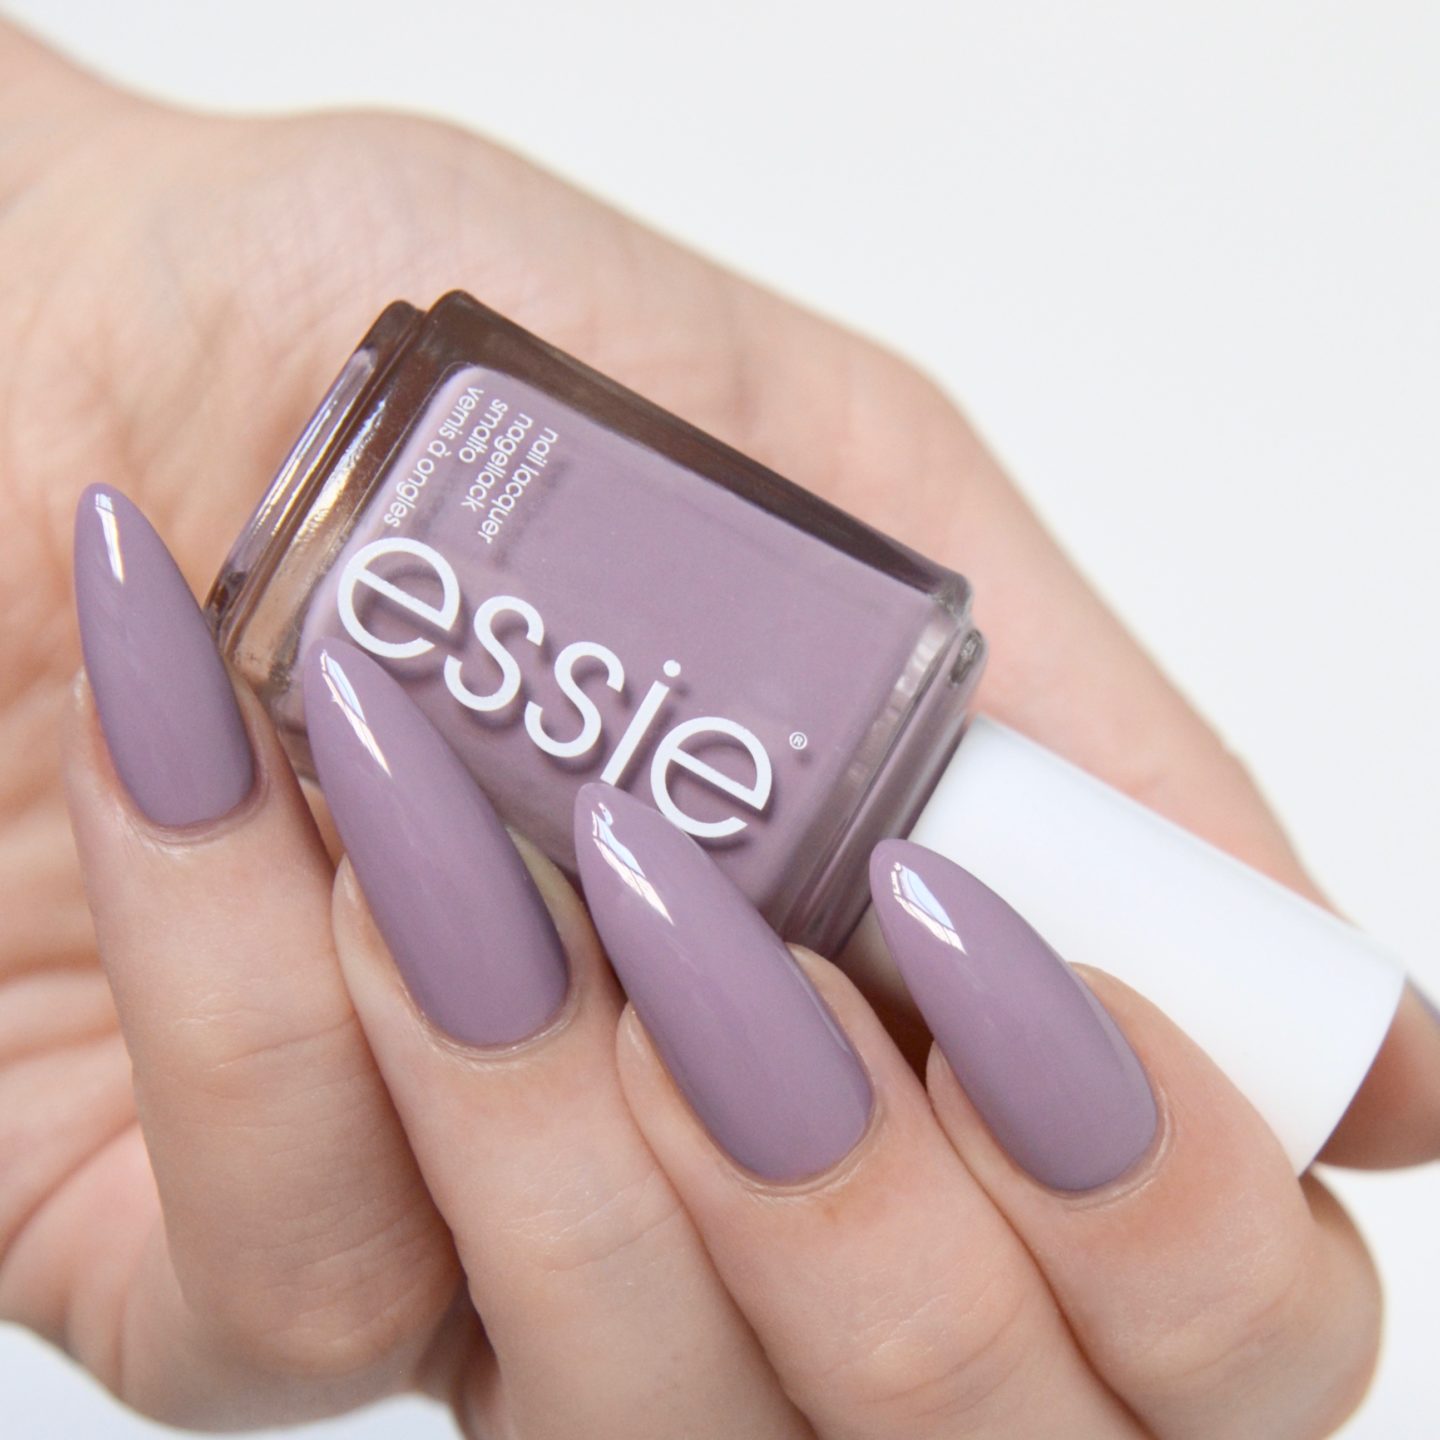 Essie Resort 2017 Ciao Effect swatches: grey- lavender polish